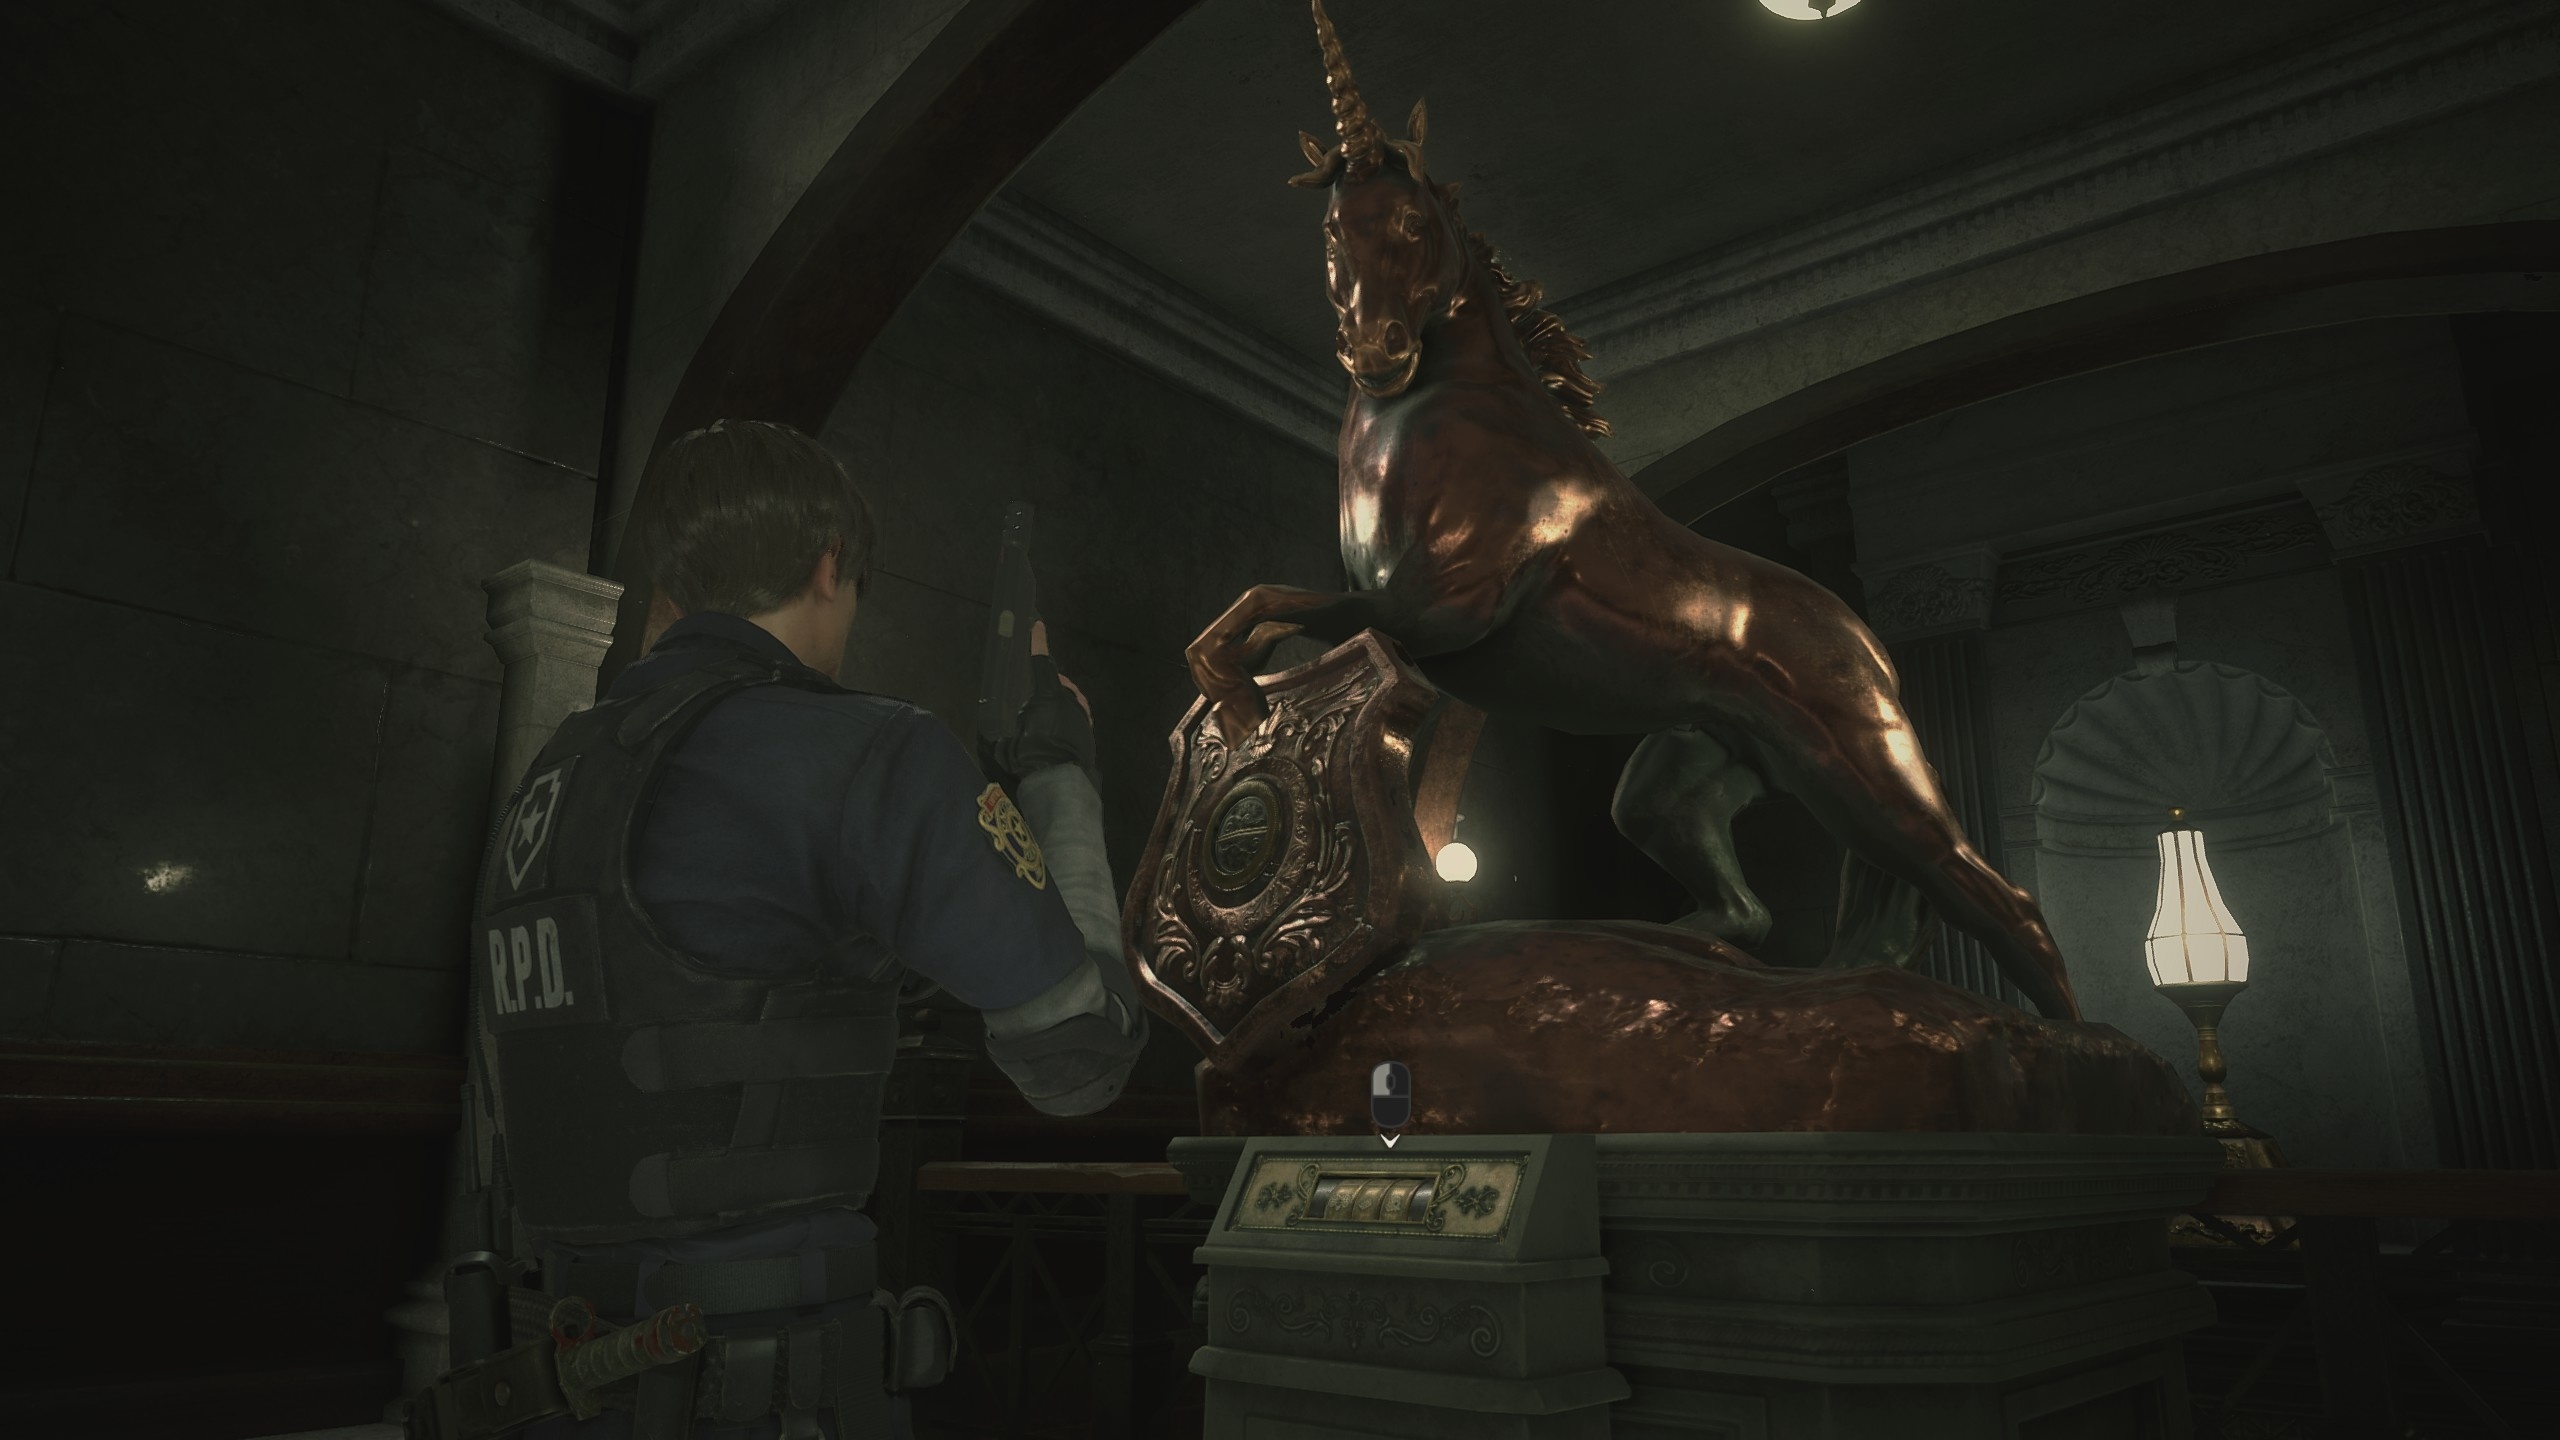 Resident evil 2 где медальоны. Статуя единорога в Resident Evil 2. Резидент ивел 2 Клэр статуя единорога. Статуя единорога в Resident Evil 2 Remake.